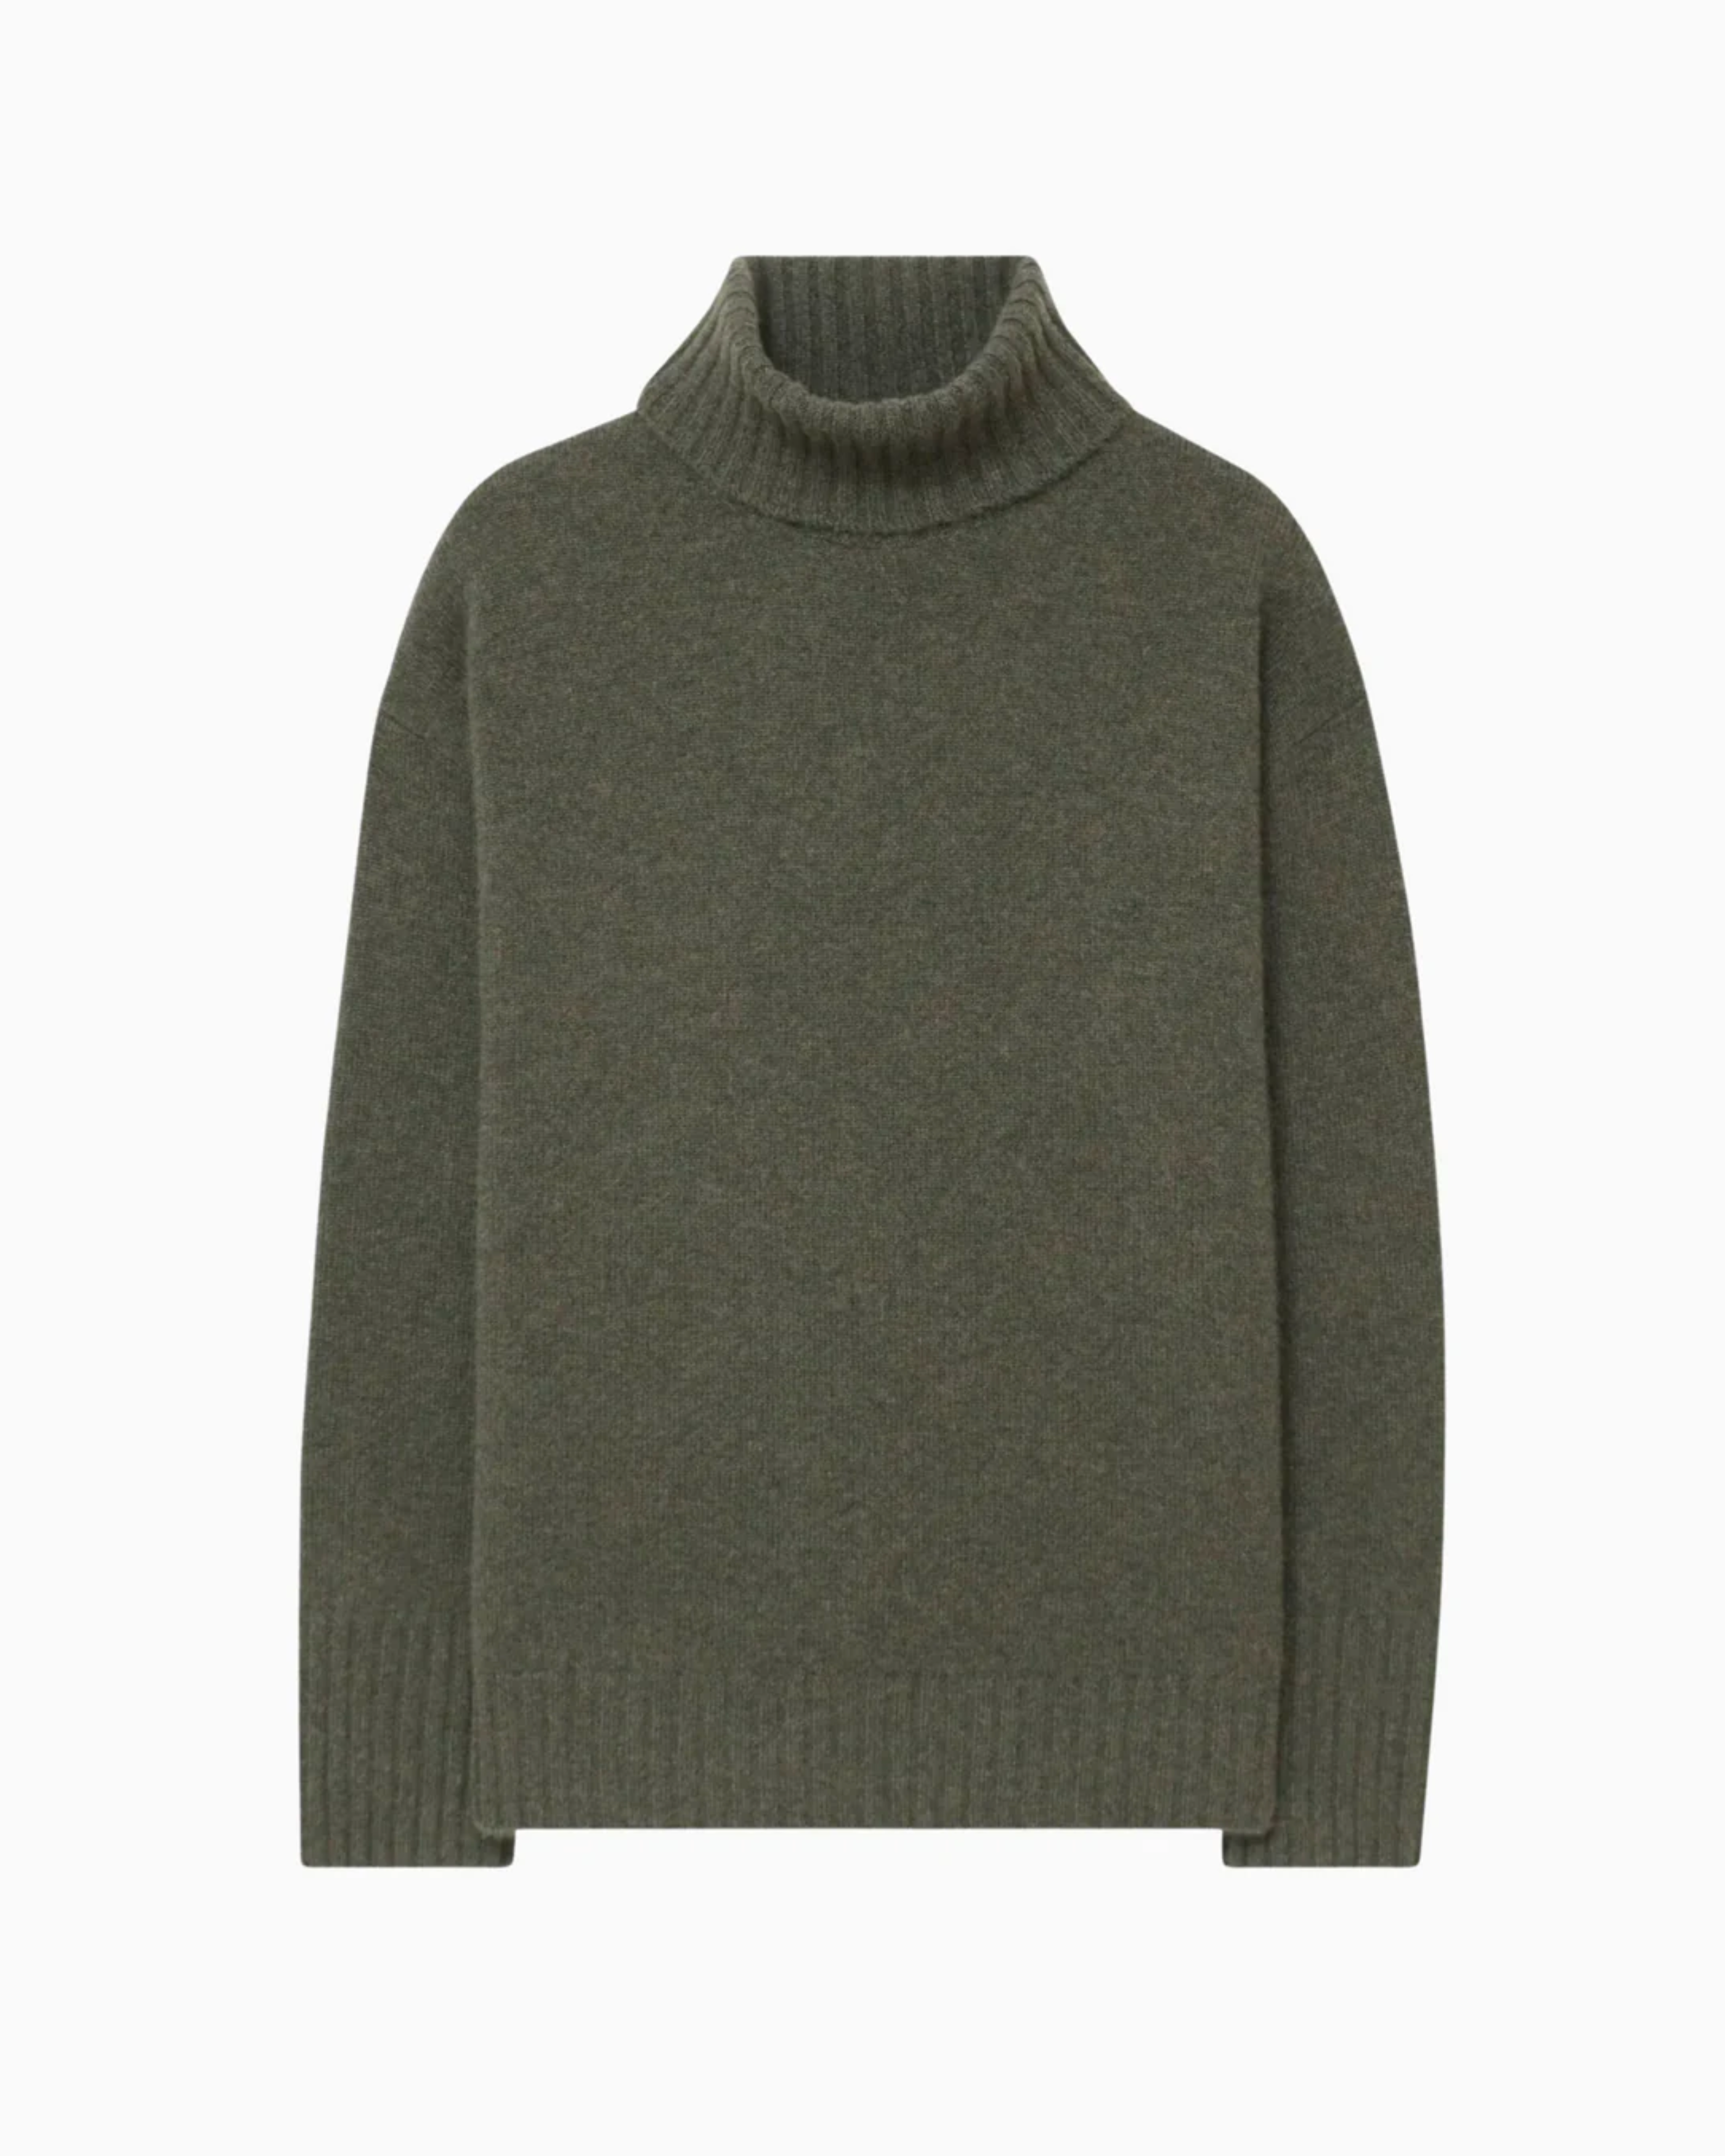 Naadam Luxe Cashmere Turtleneck Sweater in Olive